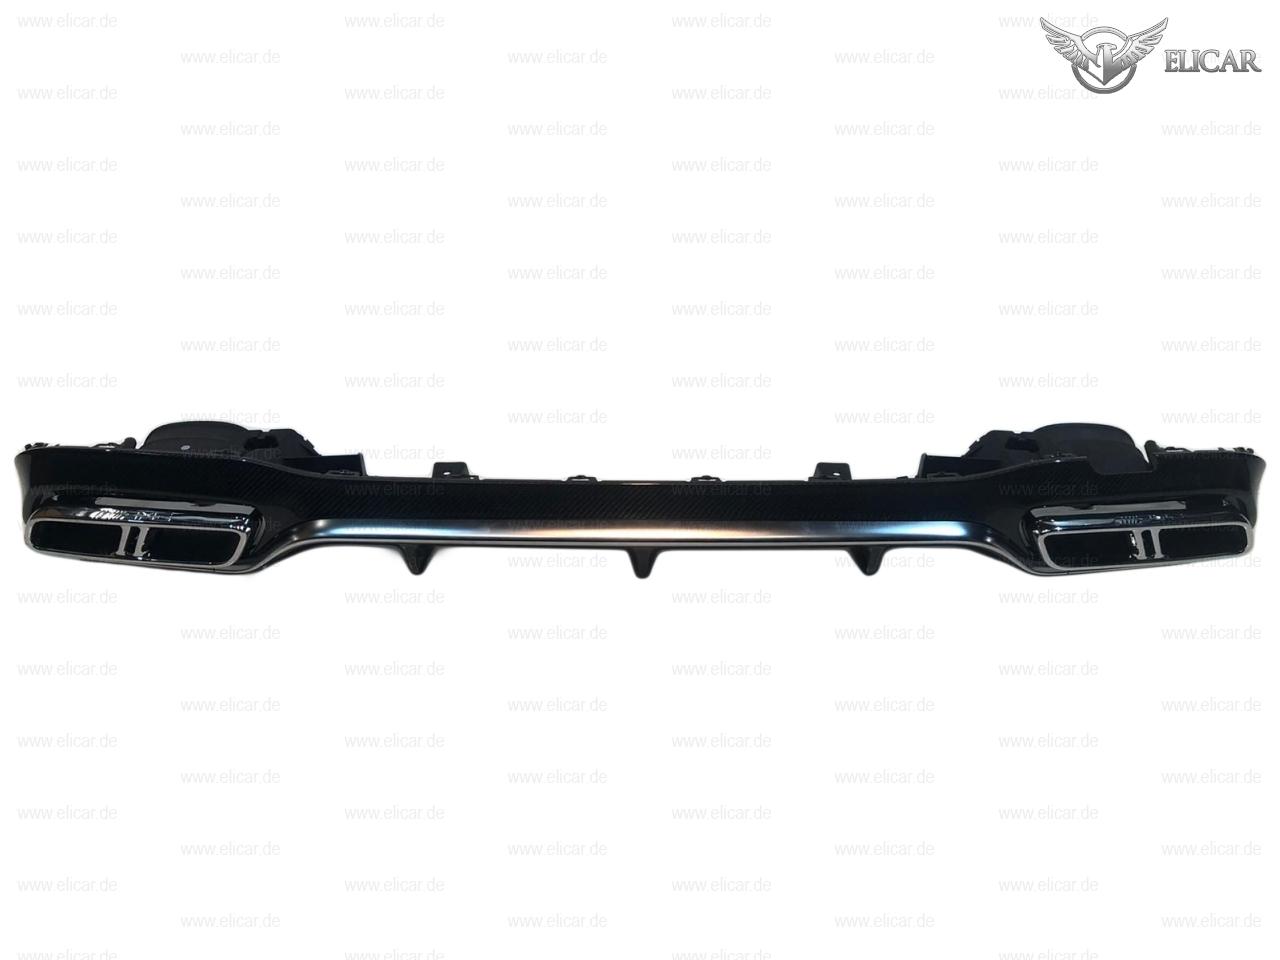 Diffusor Carbon / Abdeckung hinten unten  E63 AMG  für Mercedes-Benz 